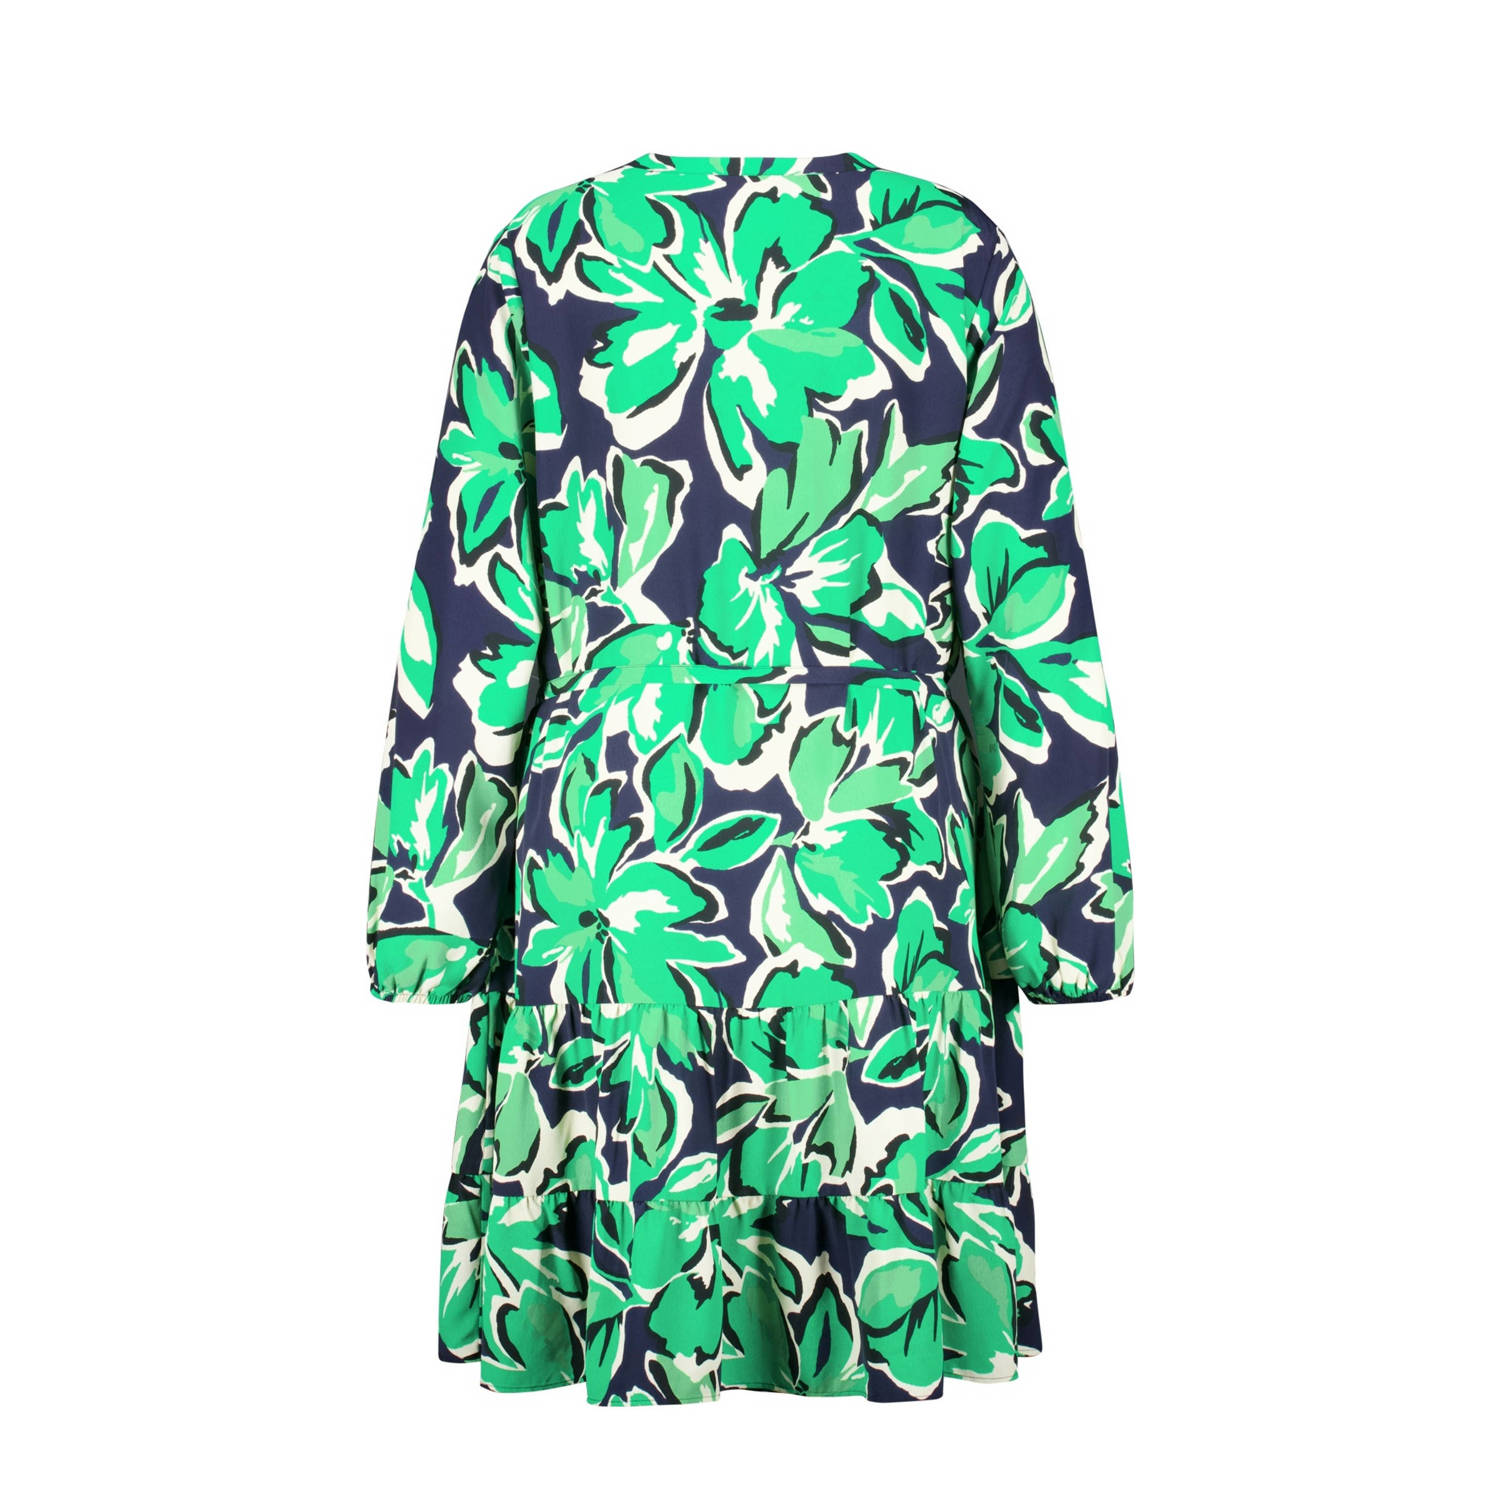 MS Mode gebloemde blousejurk groen donkerblauw ecru